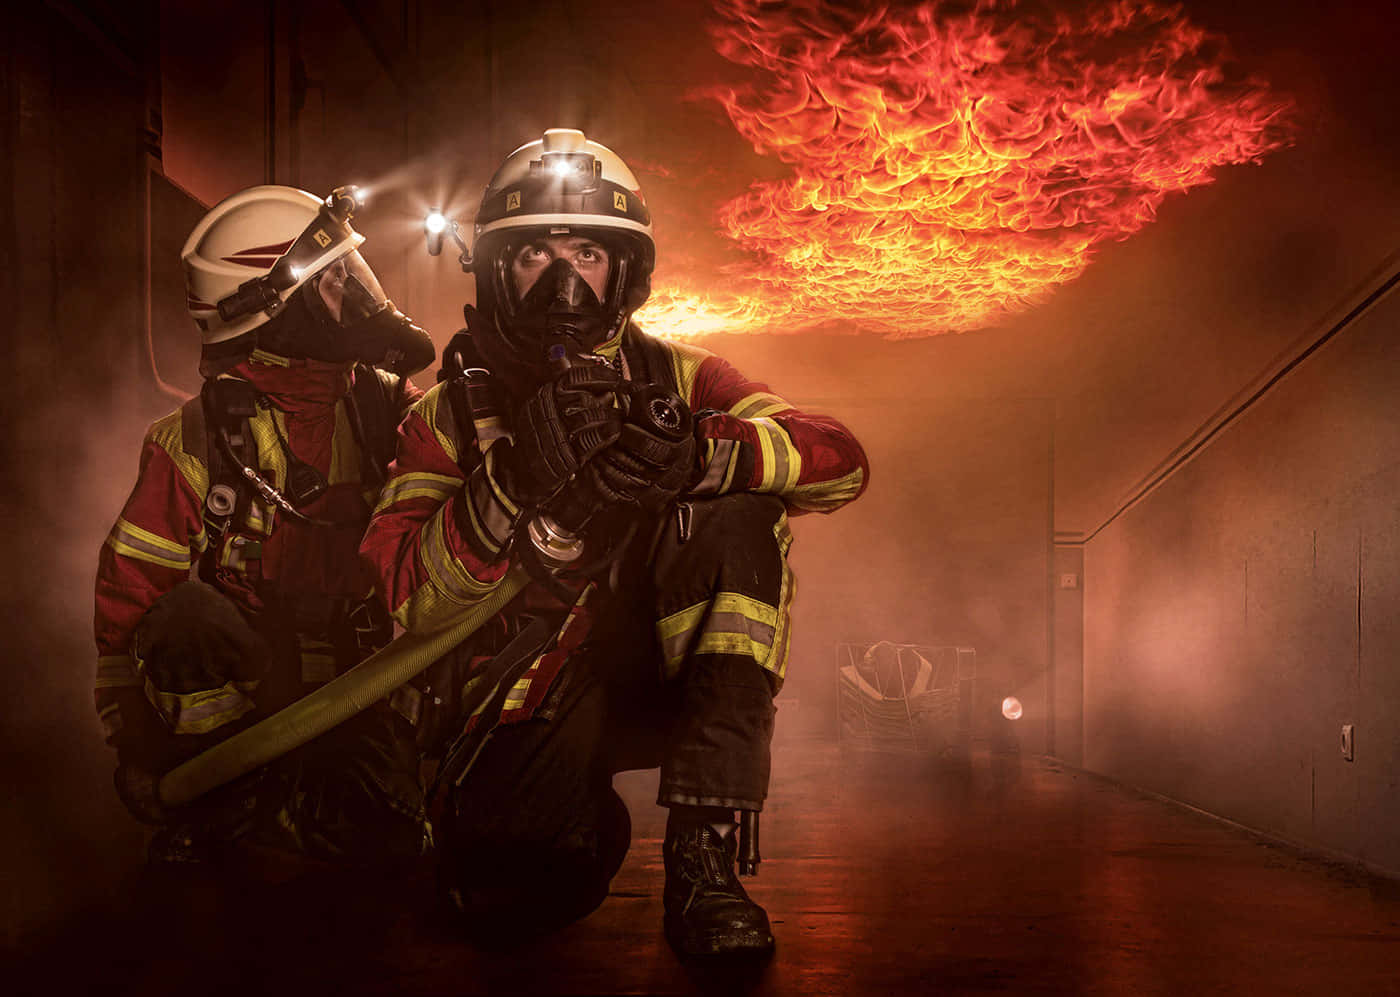 Brave Firefighter Fighting World's Wildest Fires